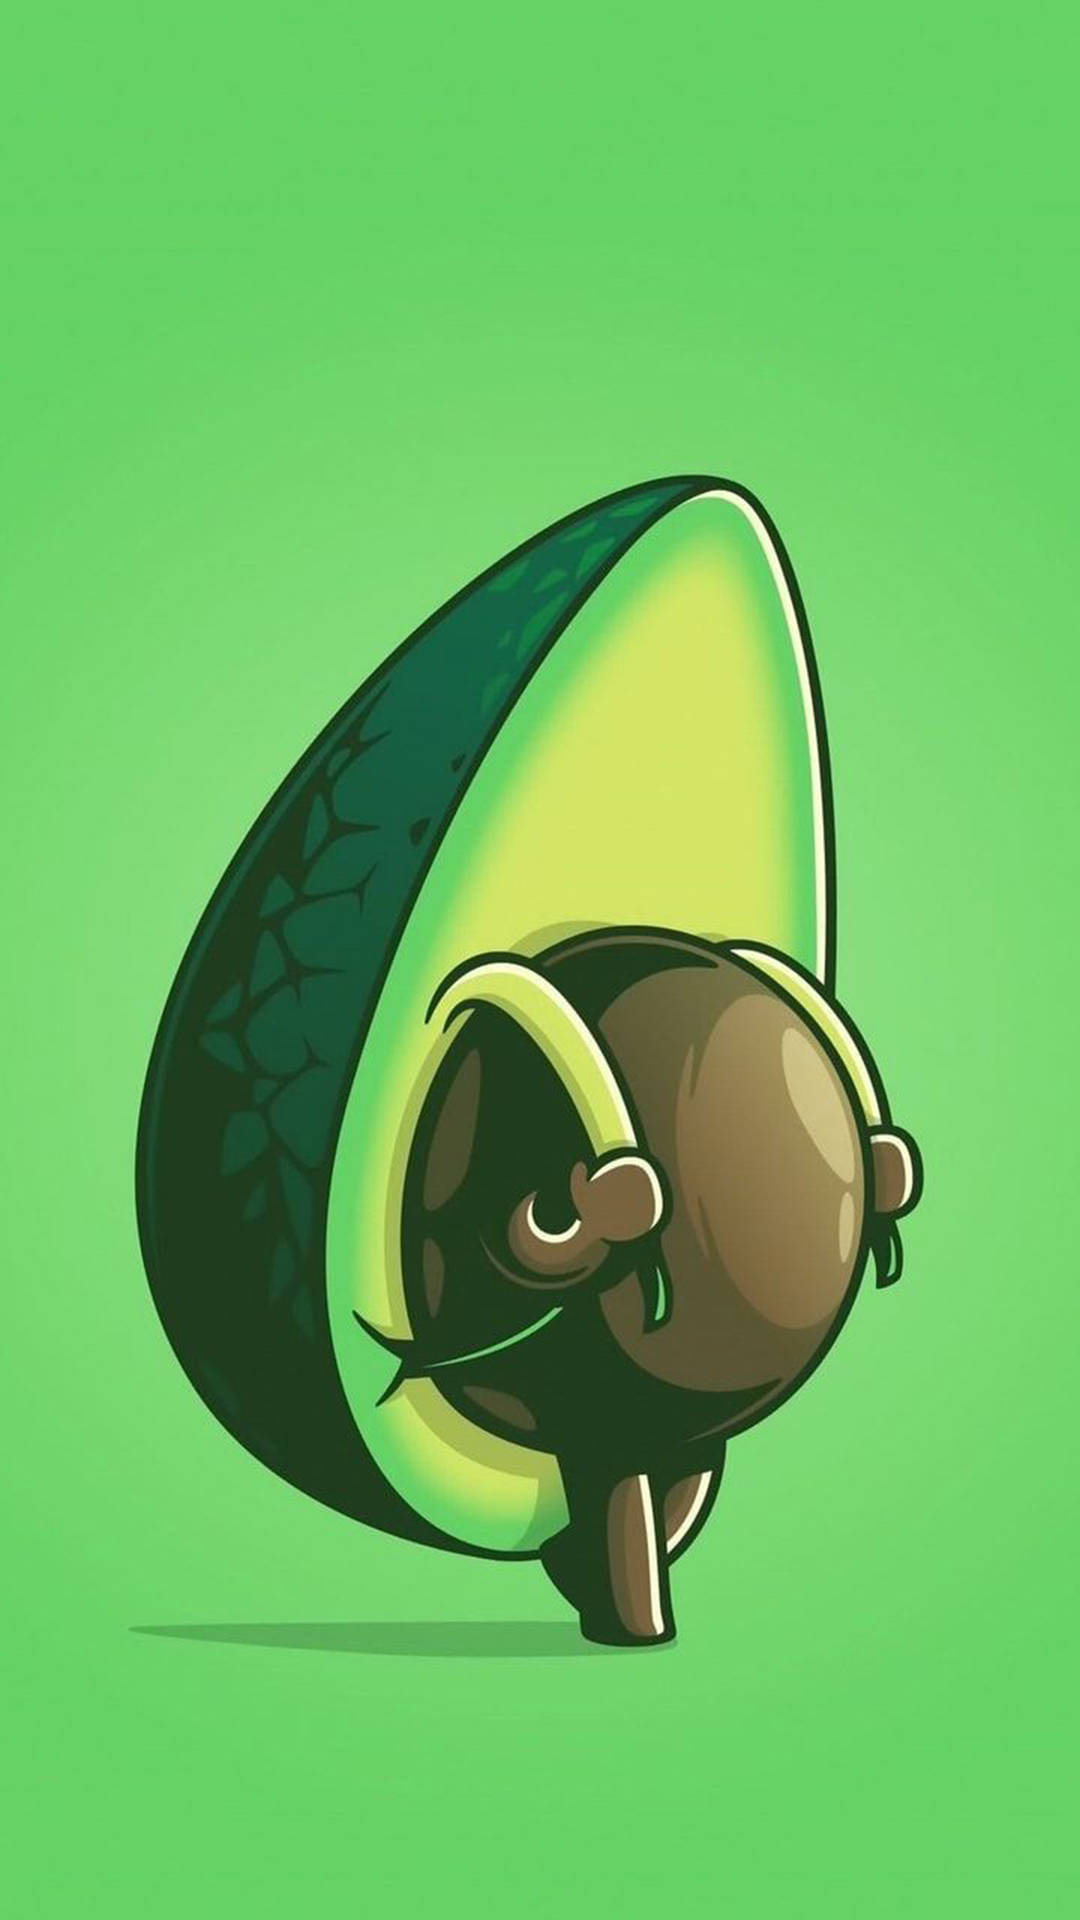 Get Green, Get Cute - Avocado Backpack! Wallpaper